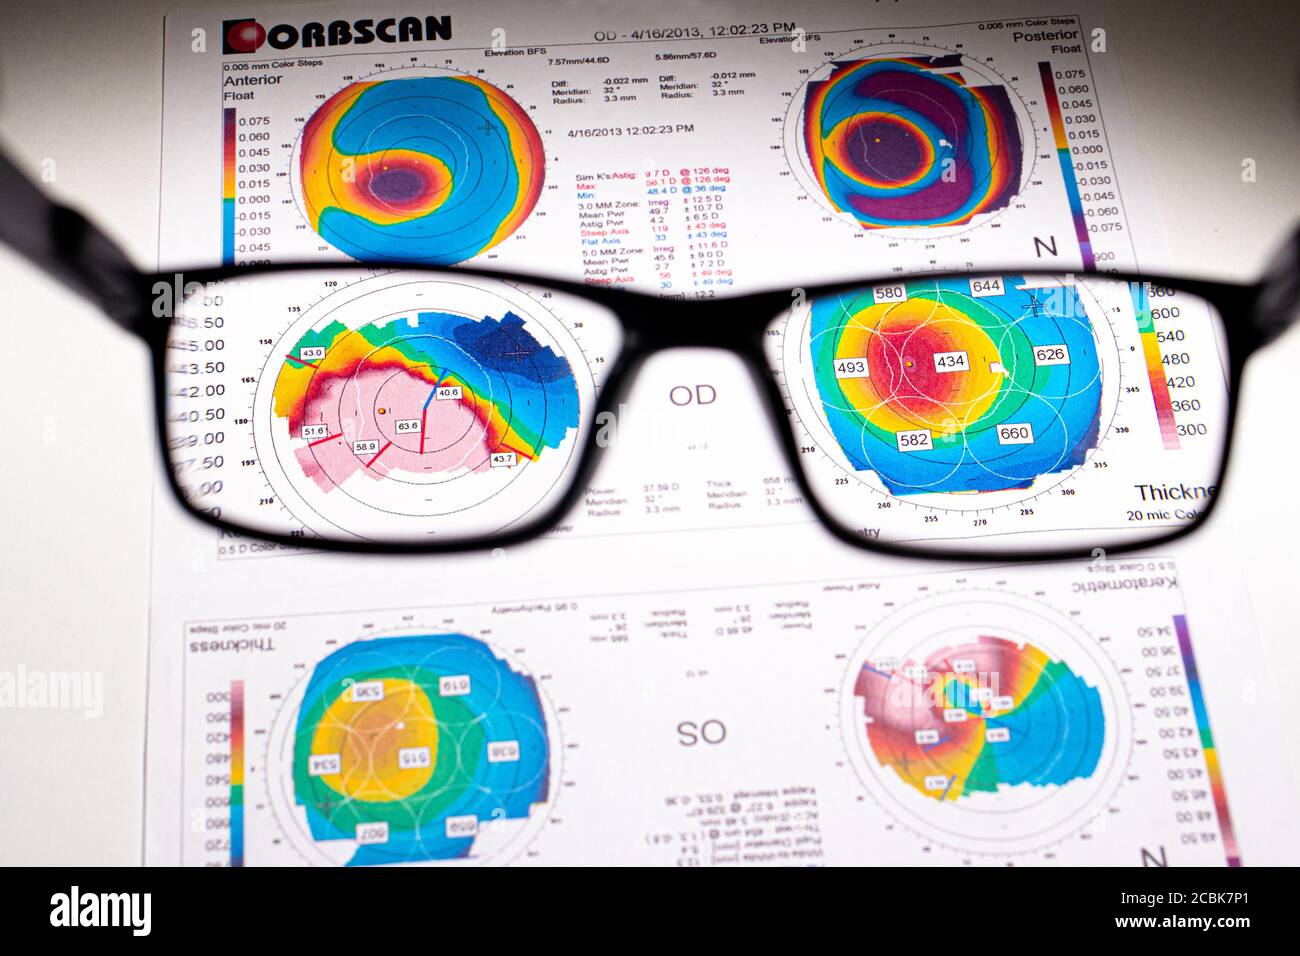 25.07.2020, Zarorizhzhya. Topography of the cornea of the eye, layout. Keratoconus and glasses. Keratotopography - ophthalmological examination. Stock Photo